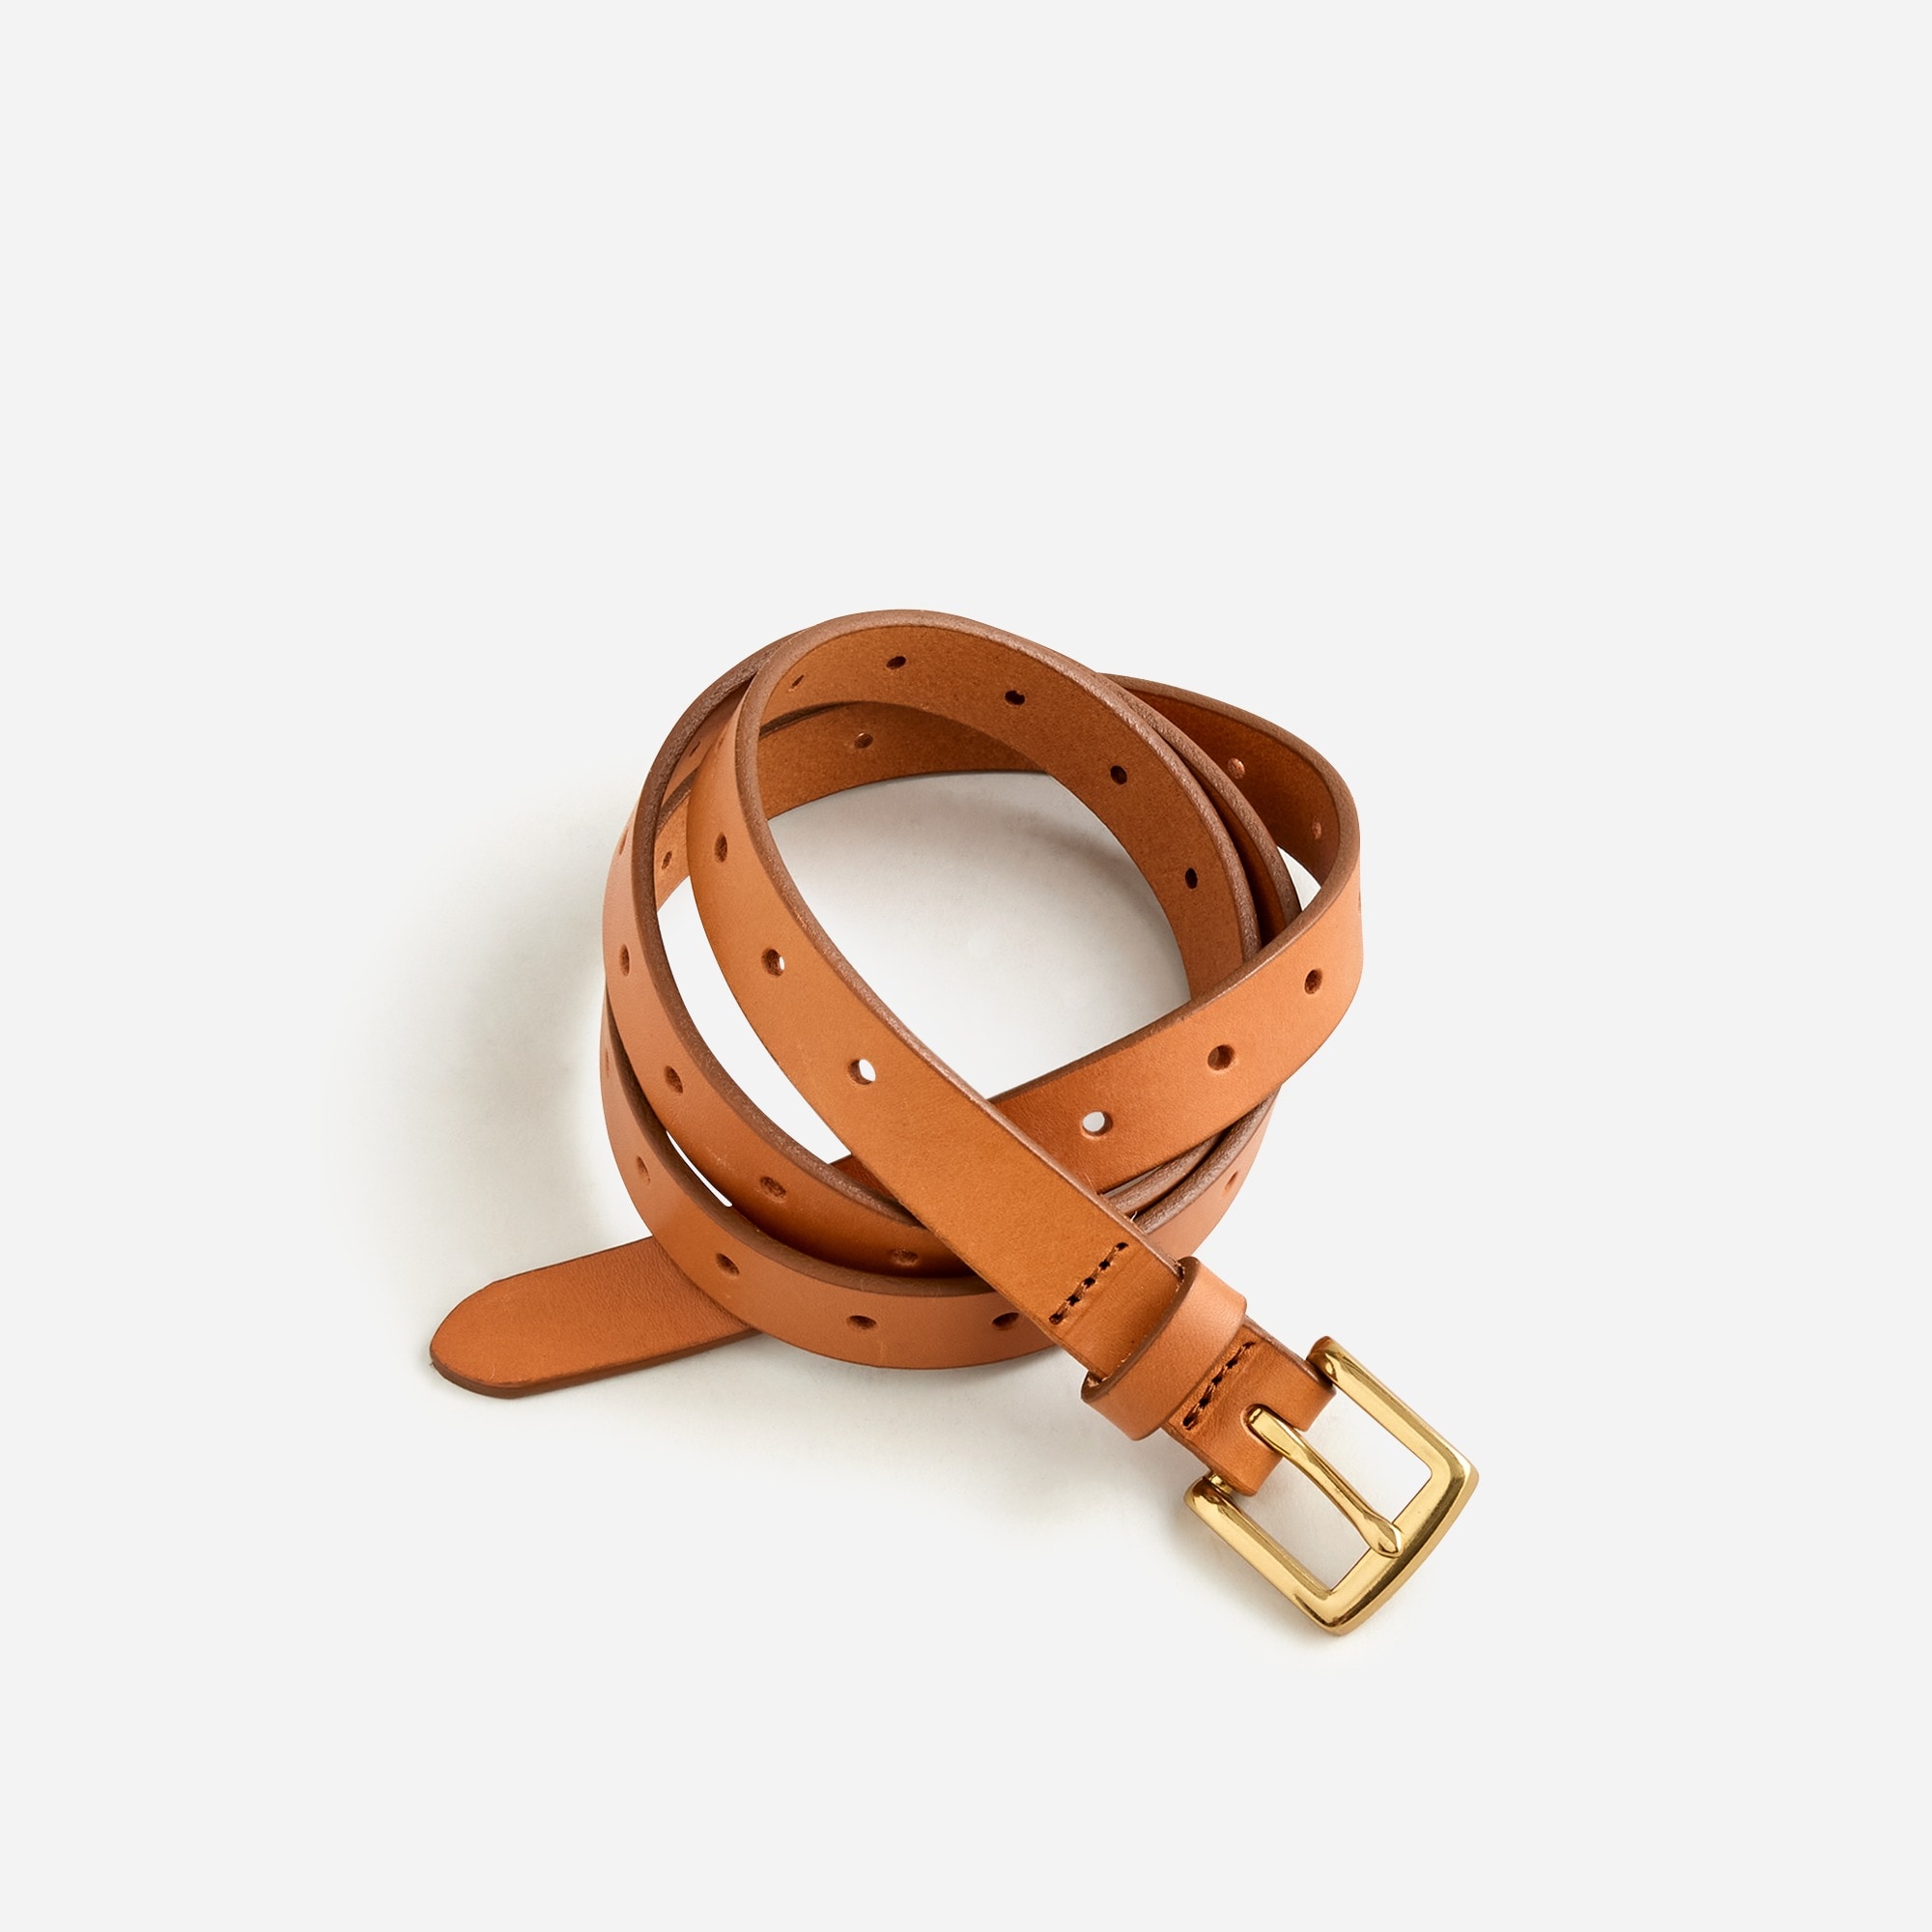  Perforated Italian leather belt